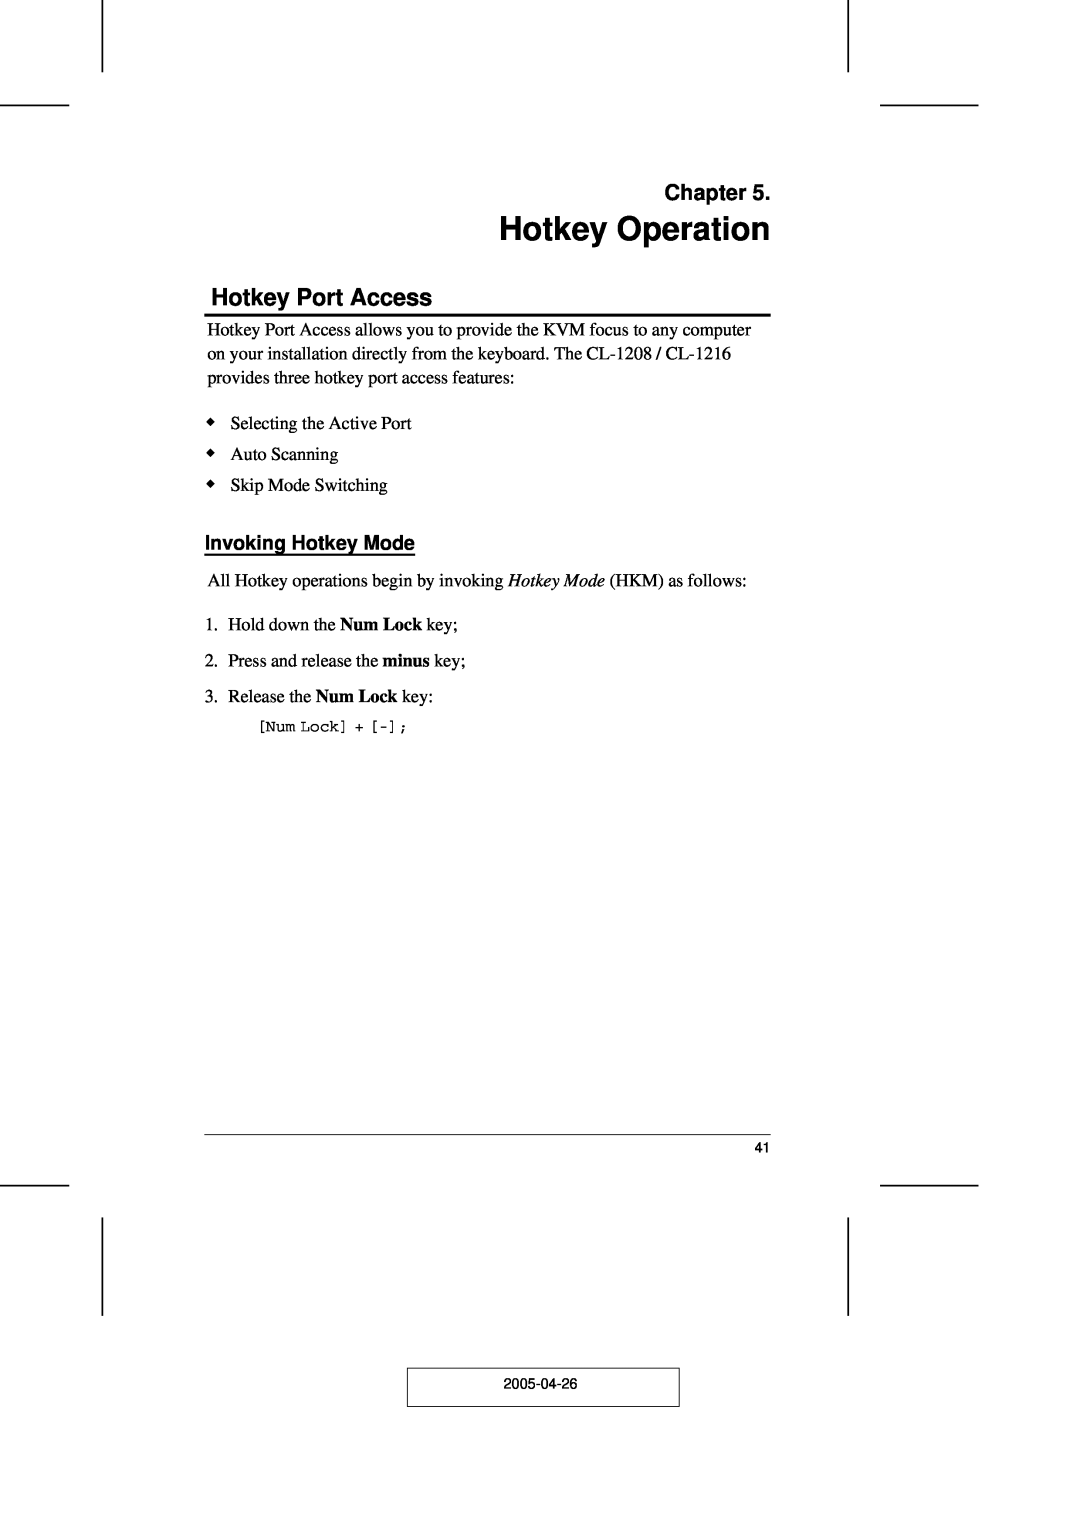 ATEN Technology CL-1216, CL-1208 user manual Hotkey Operation, Hotkey Port Access, Invoking Hotkey Mode, Chapter 